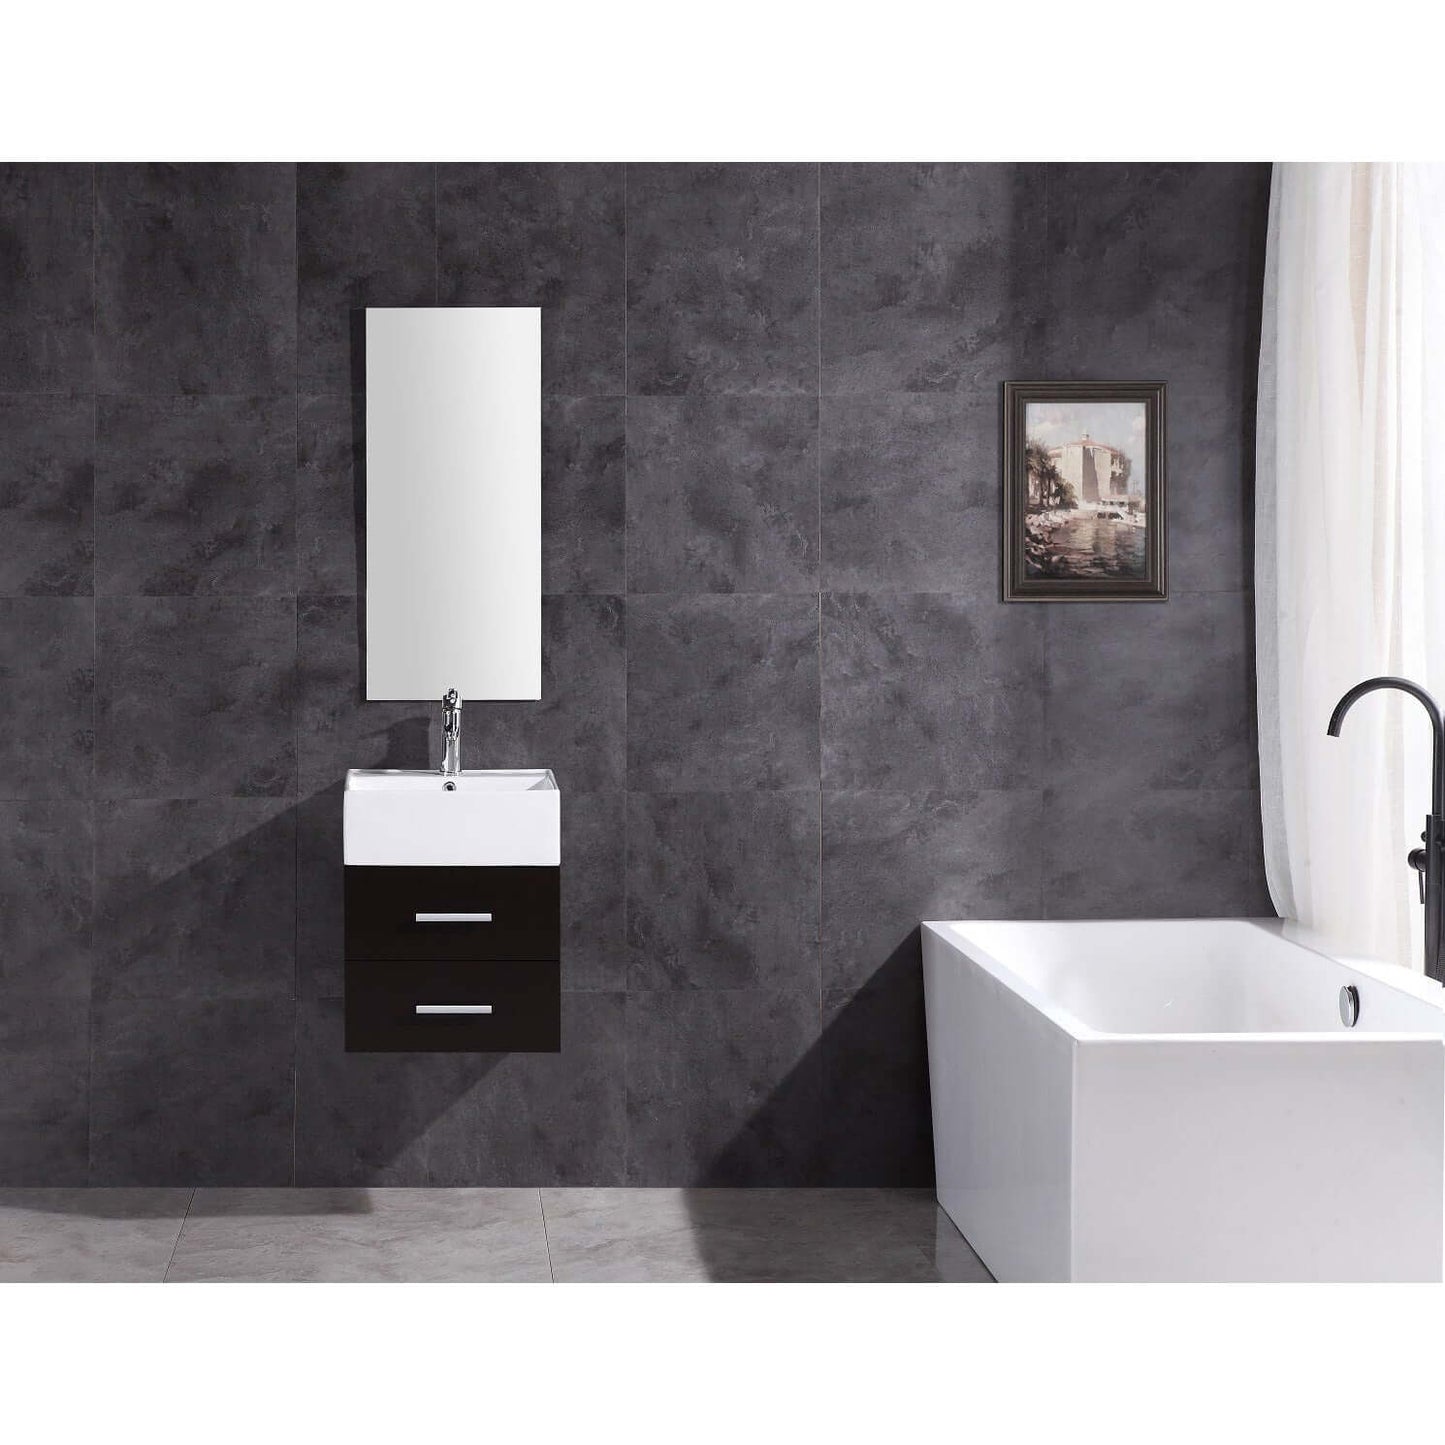 18" Bathroom Vanity Without Mirror-Pvc - WT9188-18-PVC